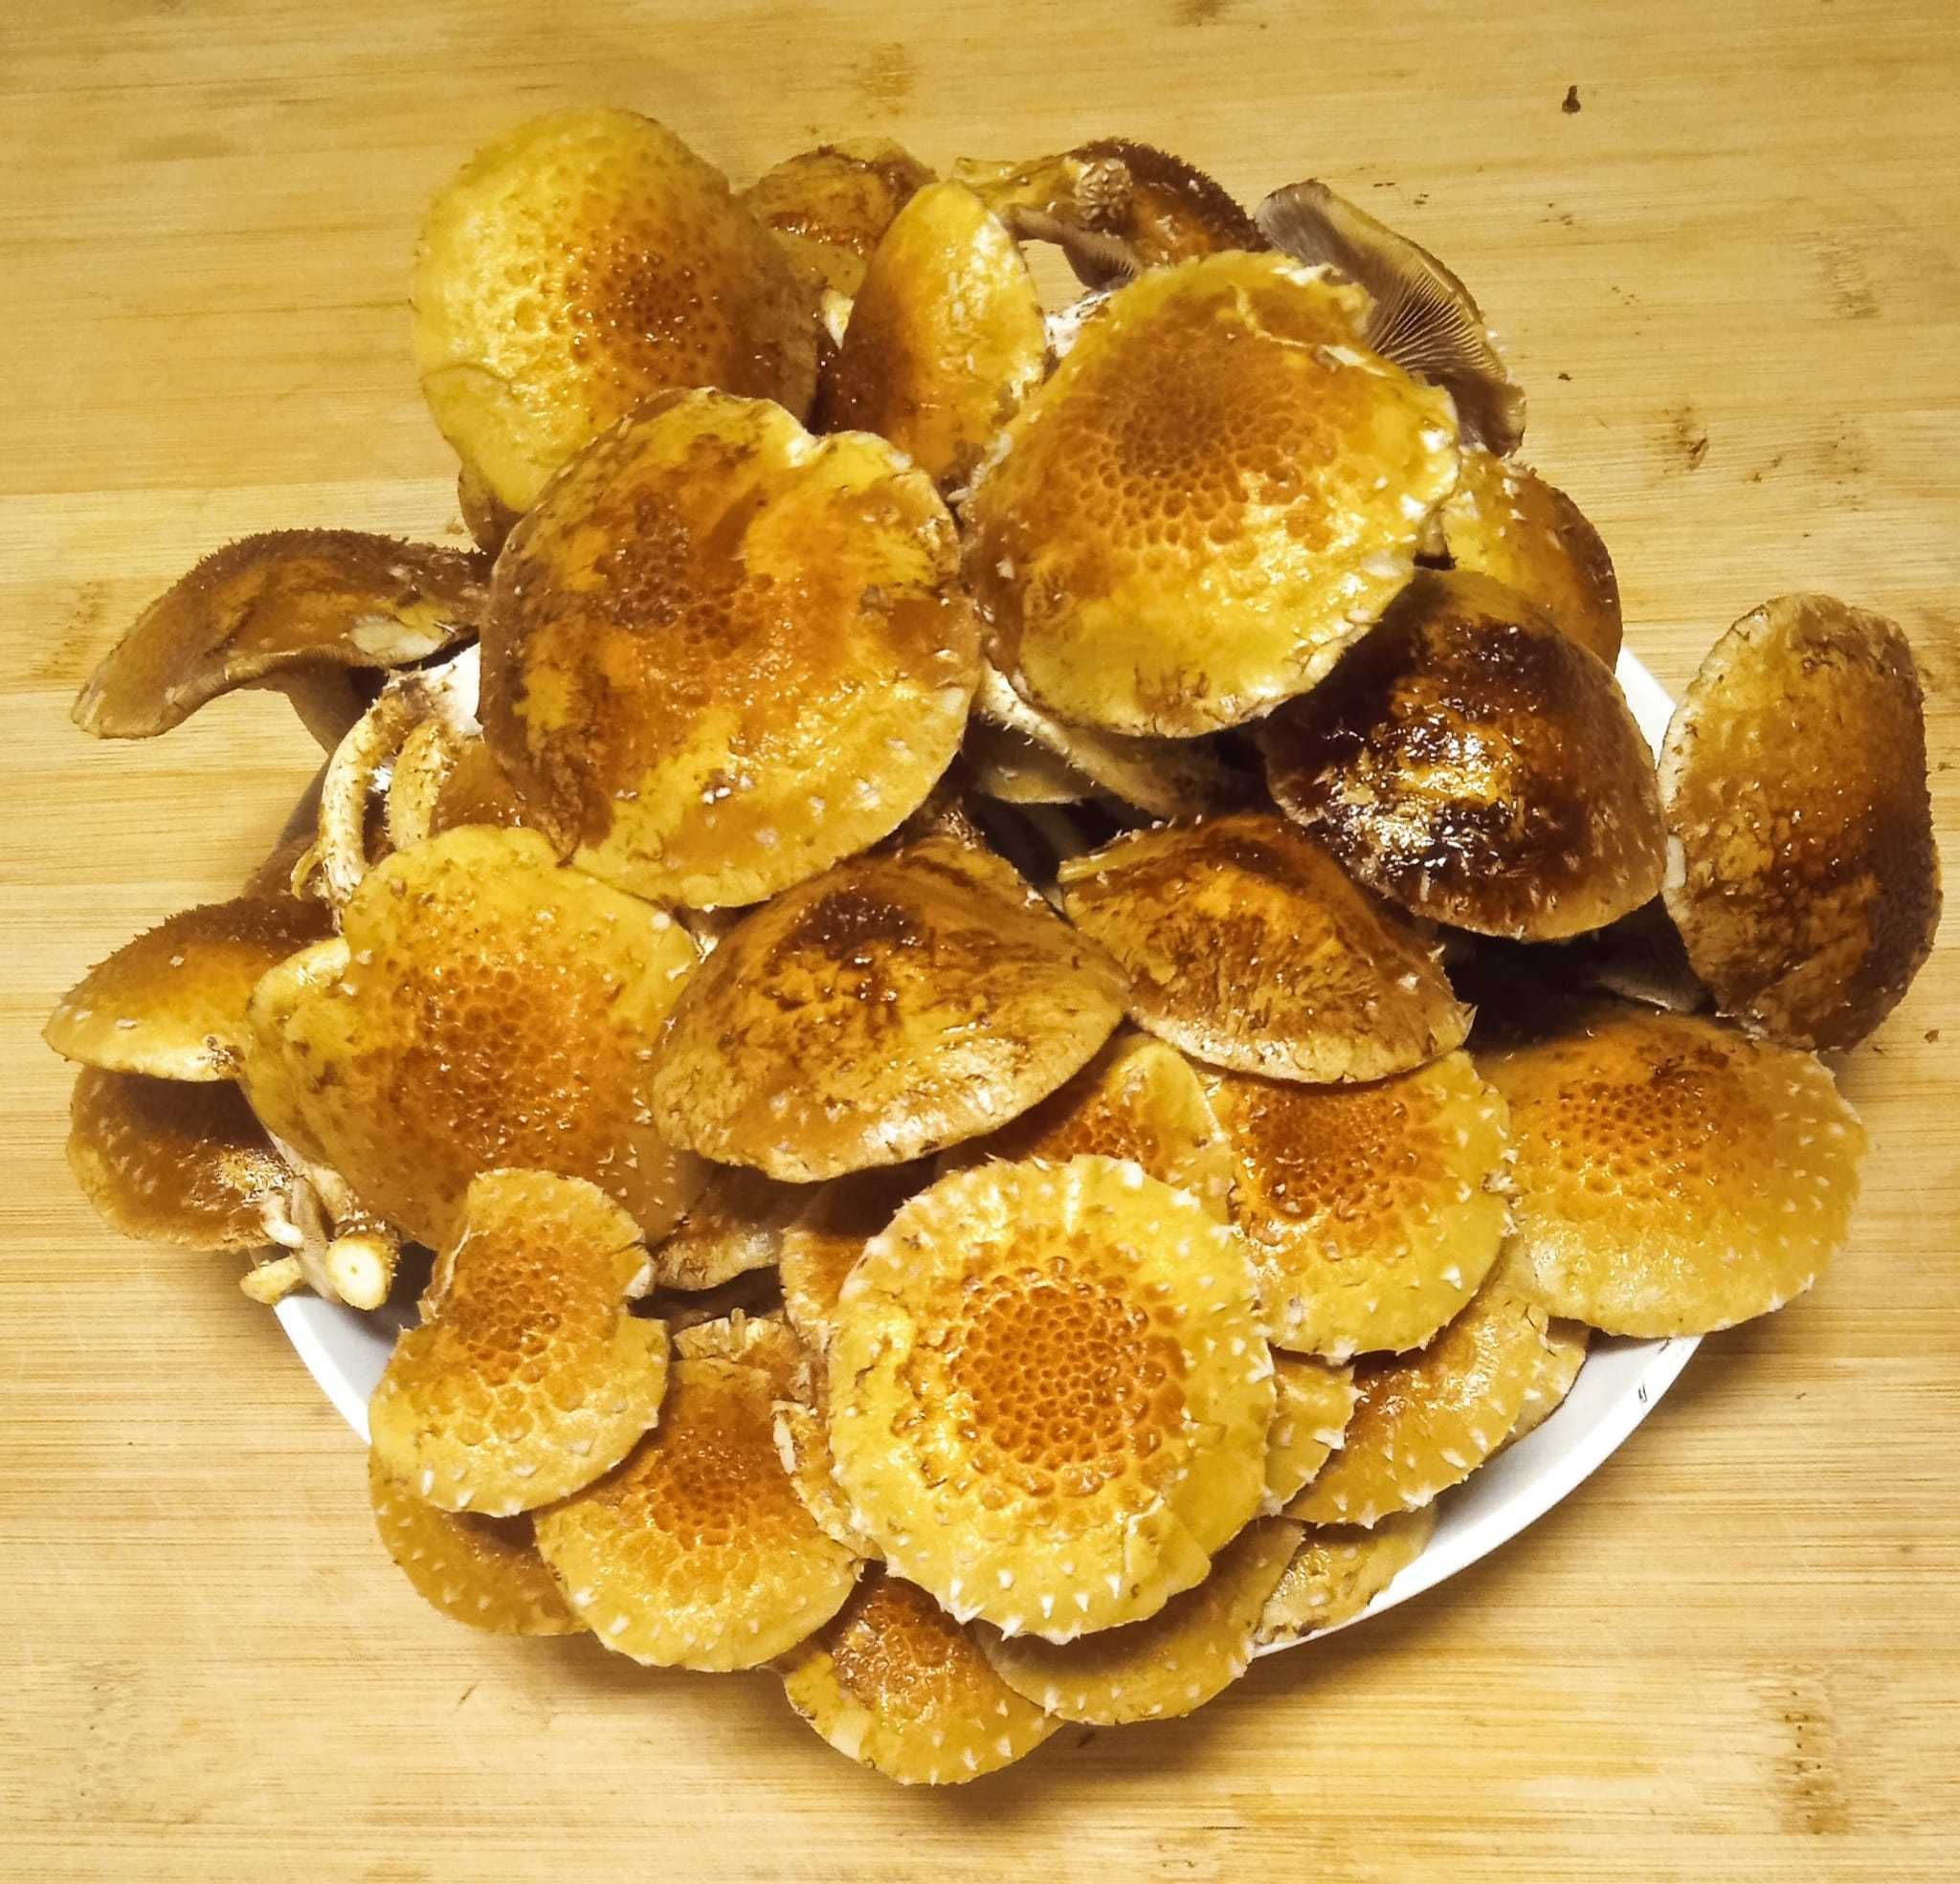 Cogumelos frescos - Pholiota Adiposa